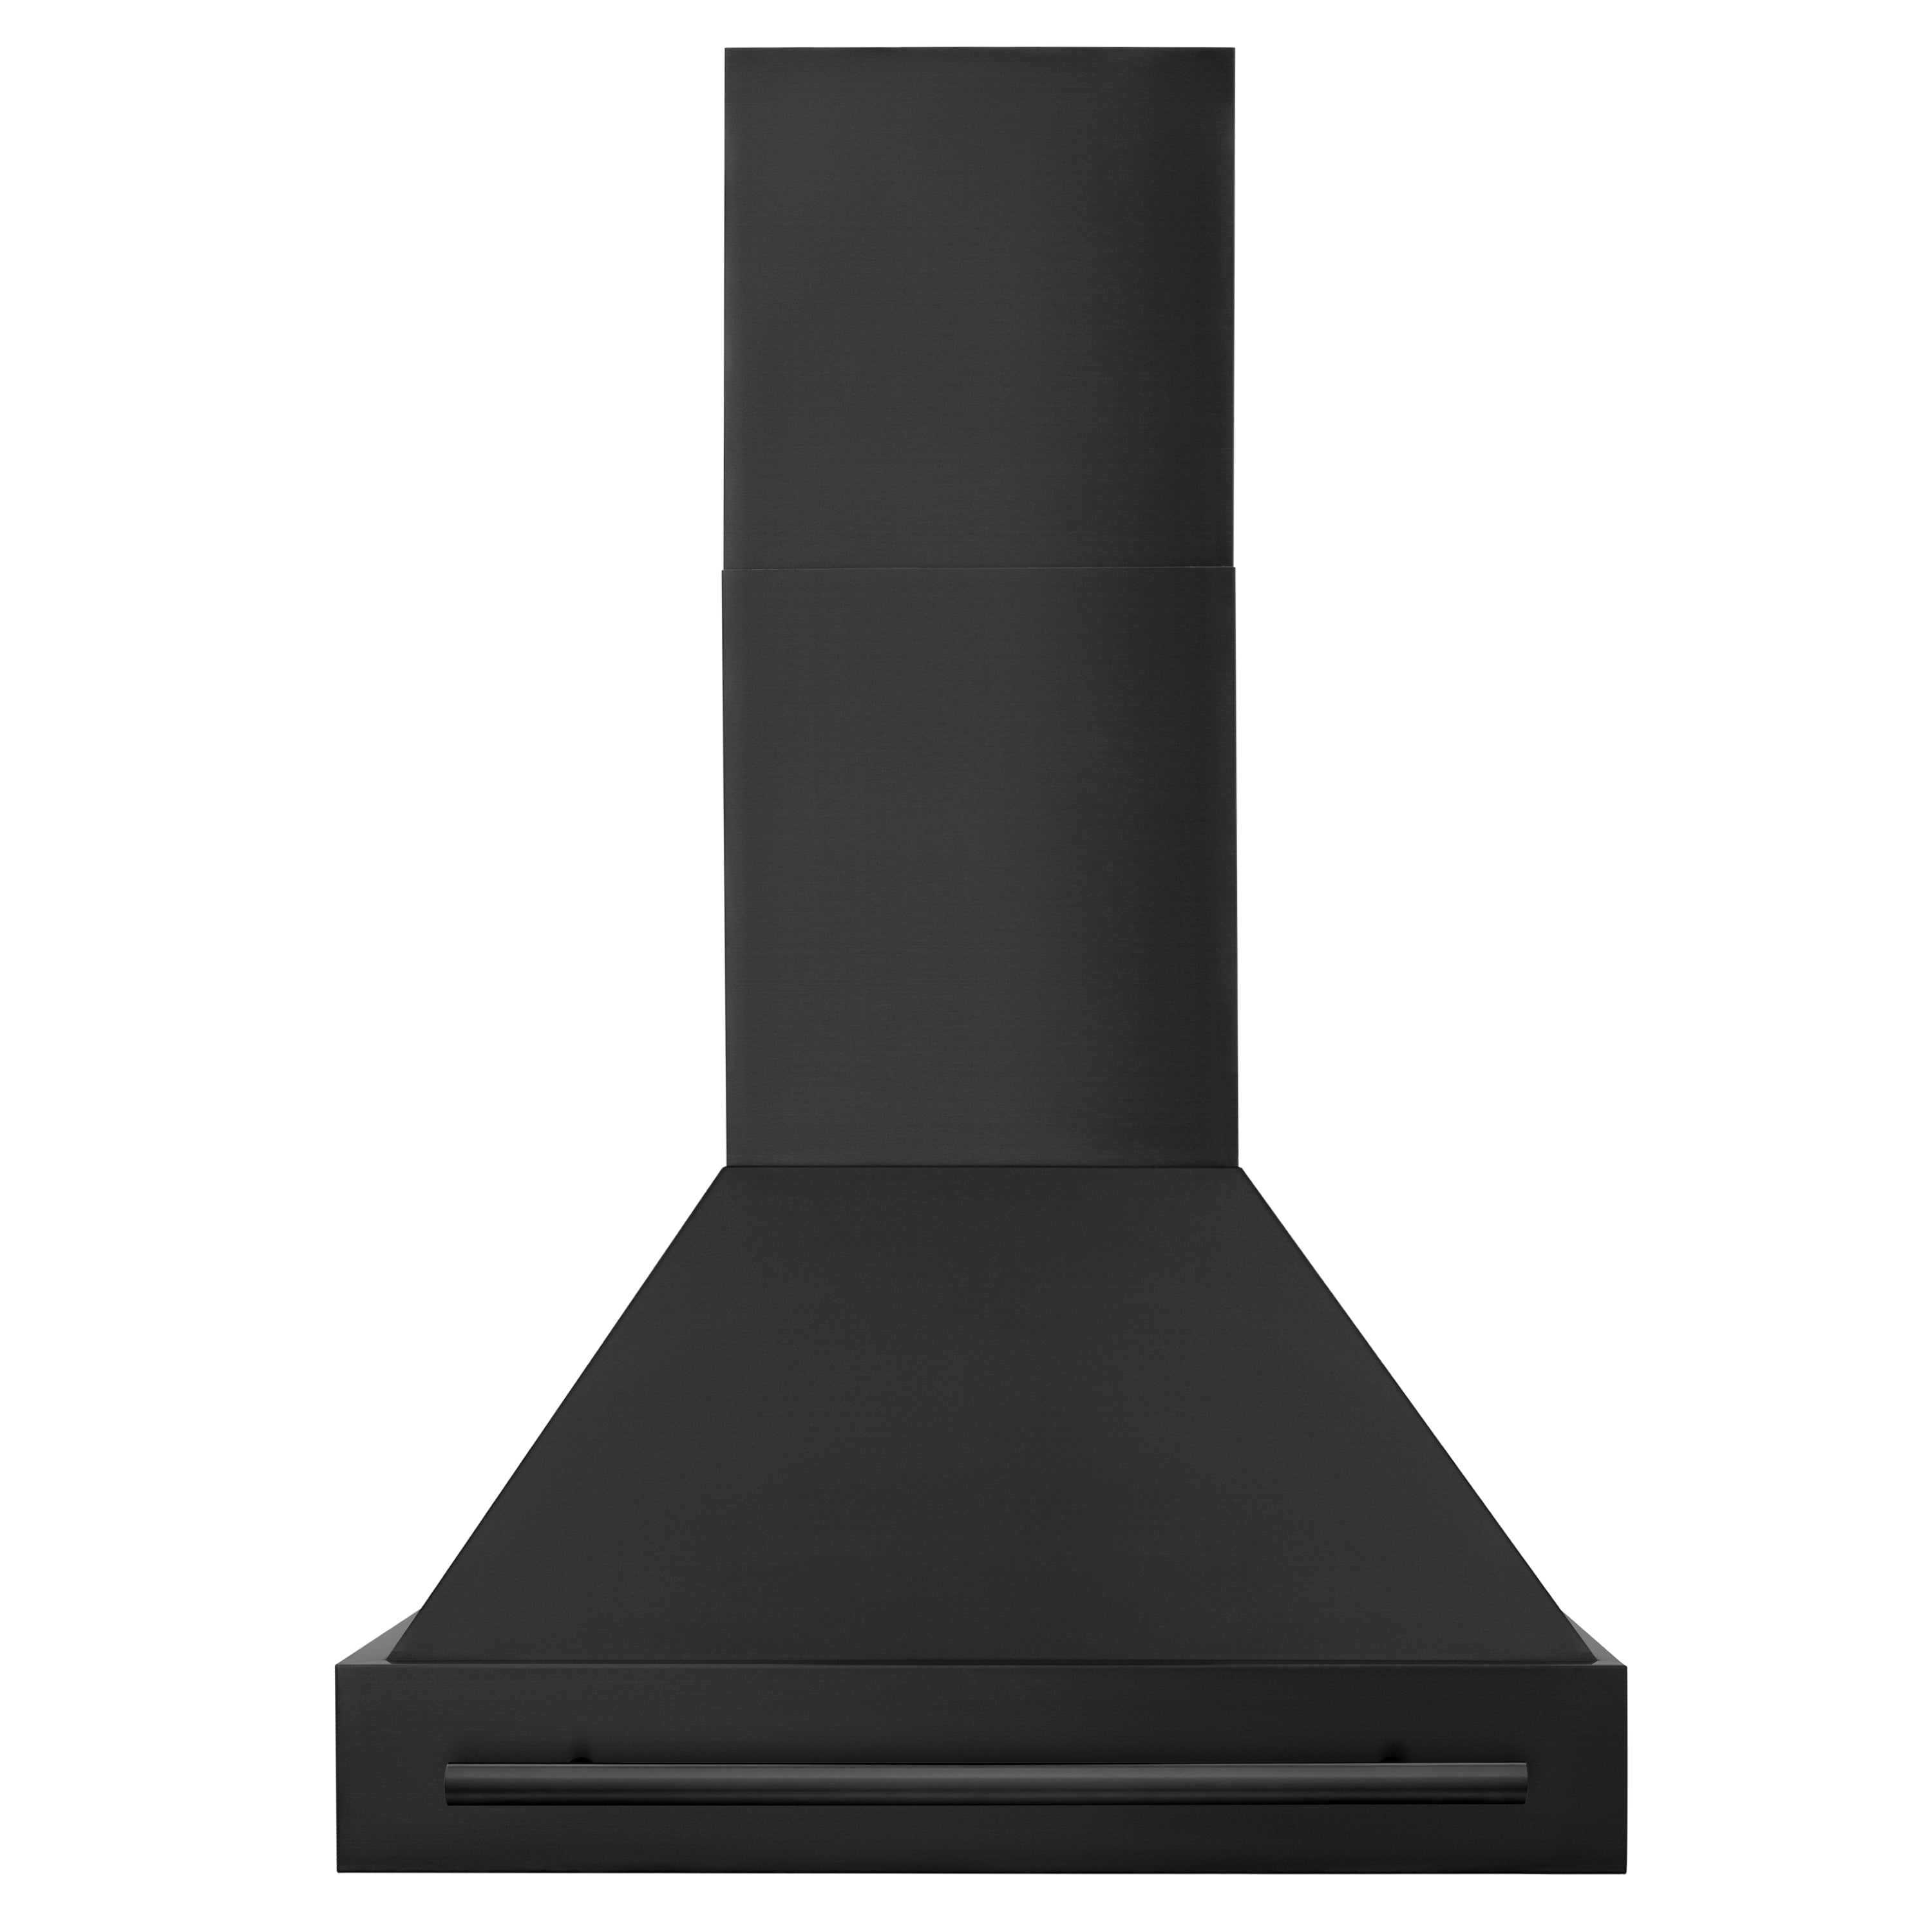 ZLINE Black Stainless Steel Range Hood with Black Stainless Steel Handle front.